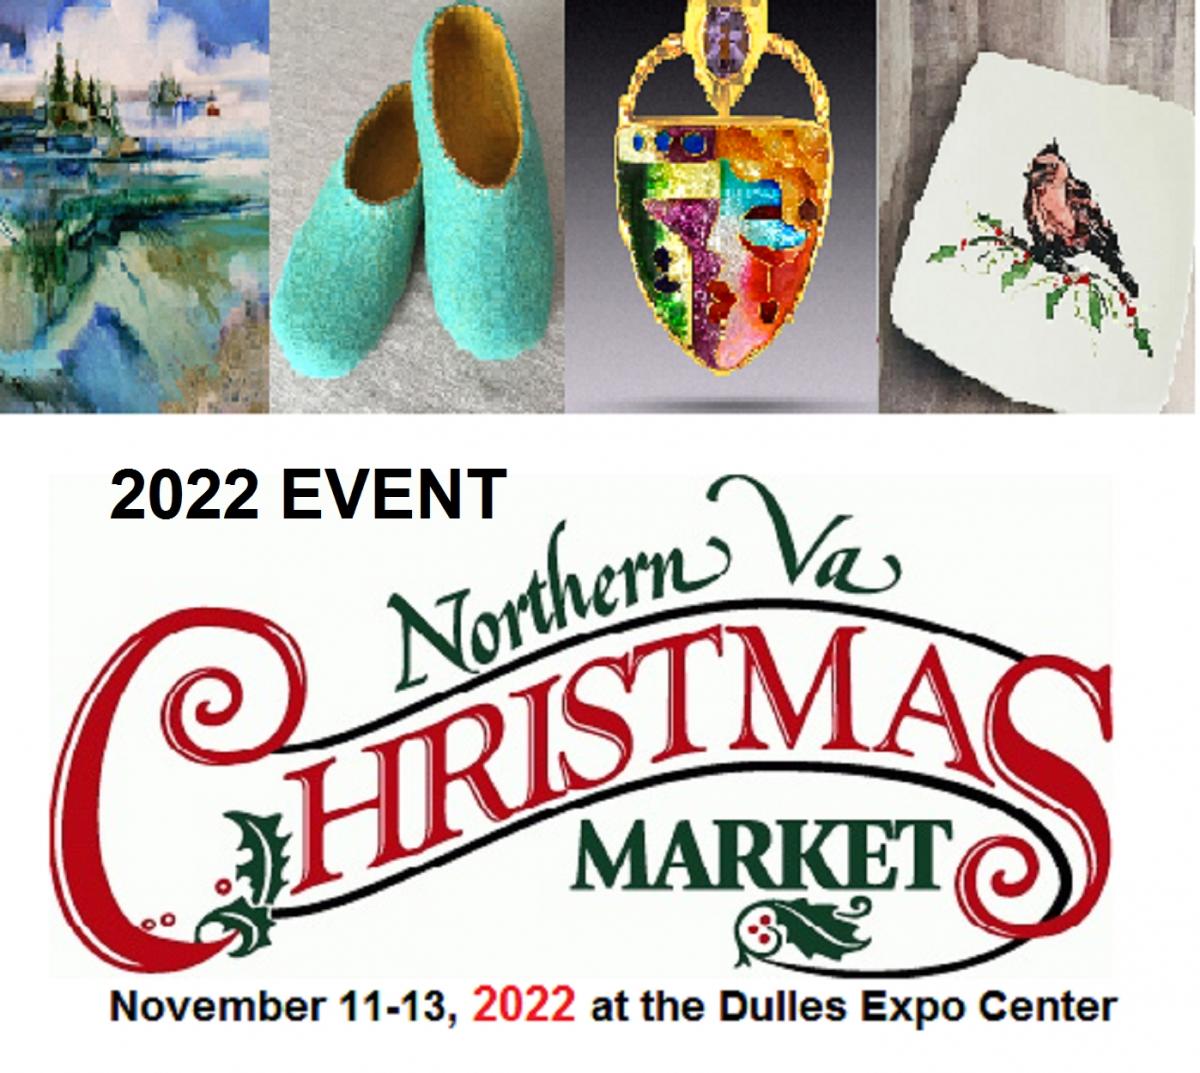 29th Annual Northern Virginia Christmas Market